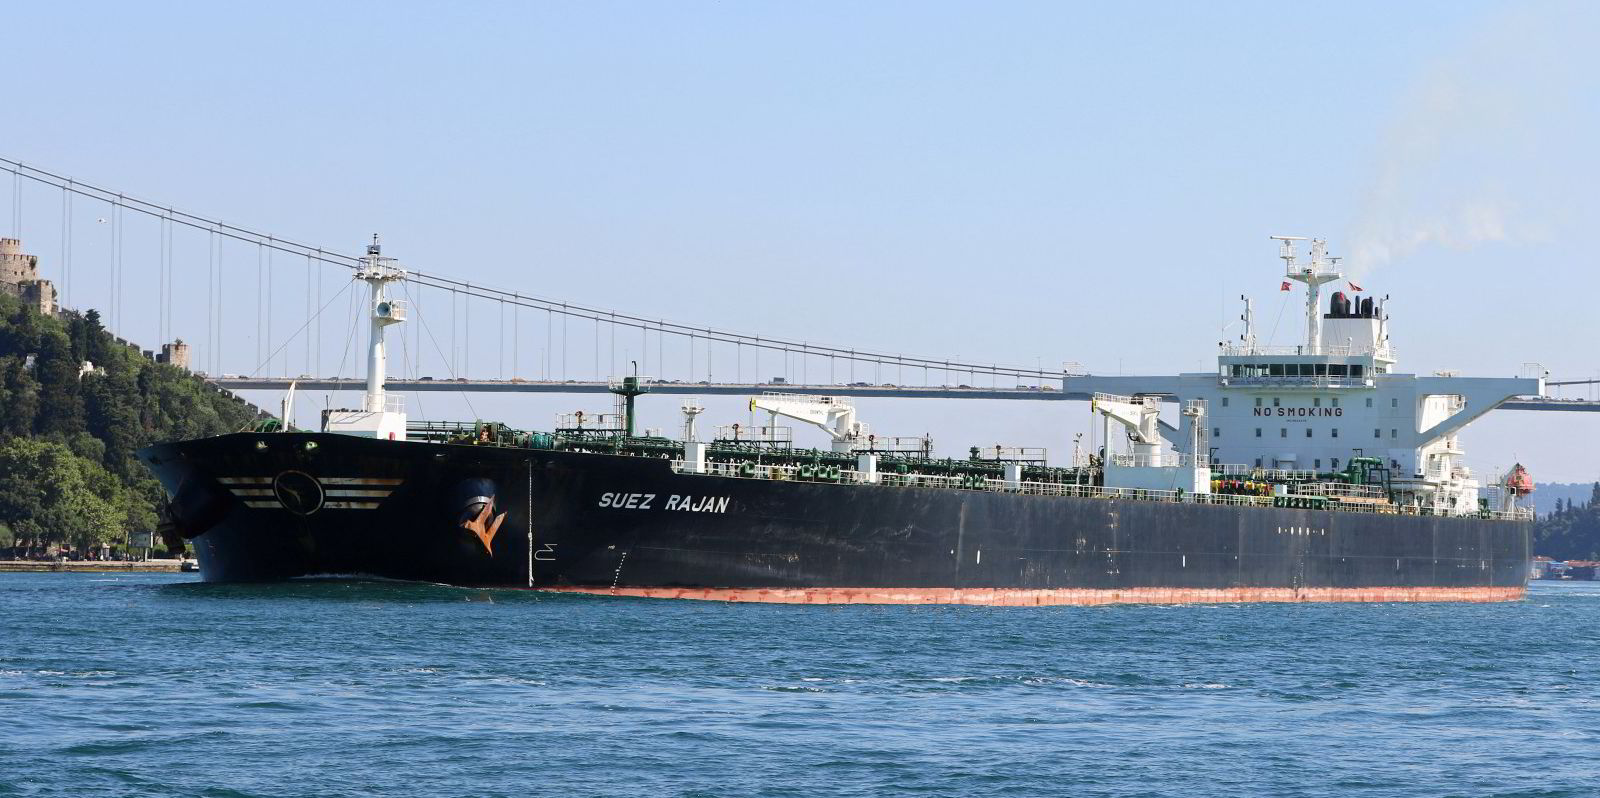 US lightering companies 'afraid' to touch Iranian oil on Greek tanker Suez  Rajan | TradeWinds